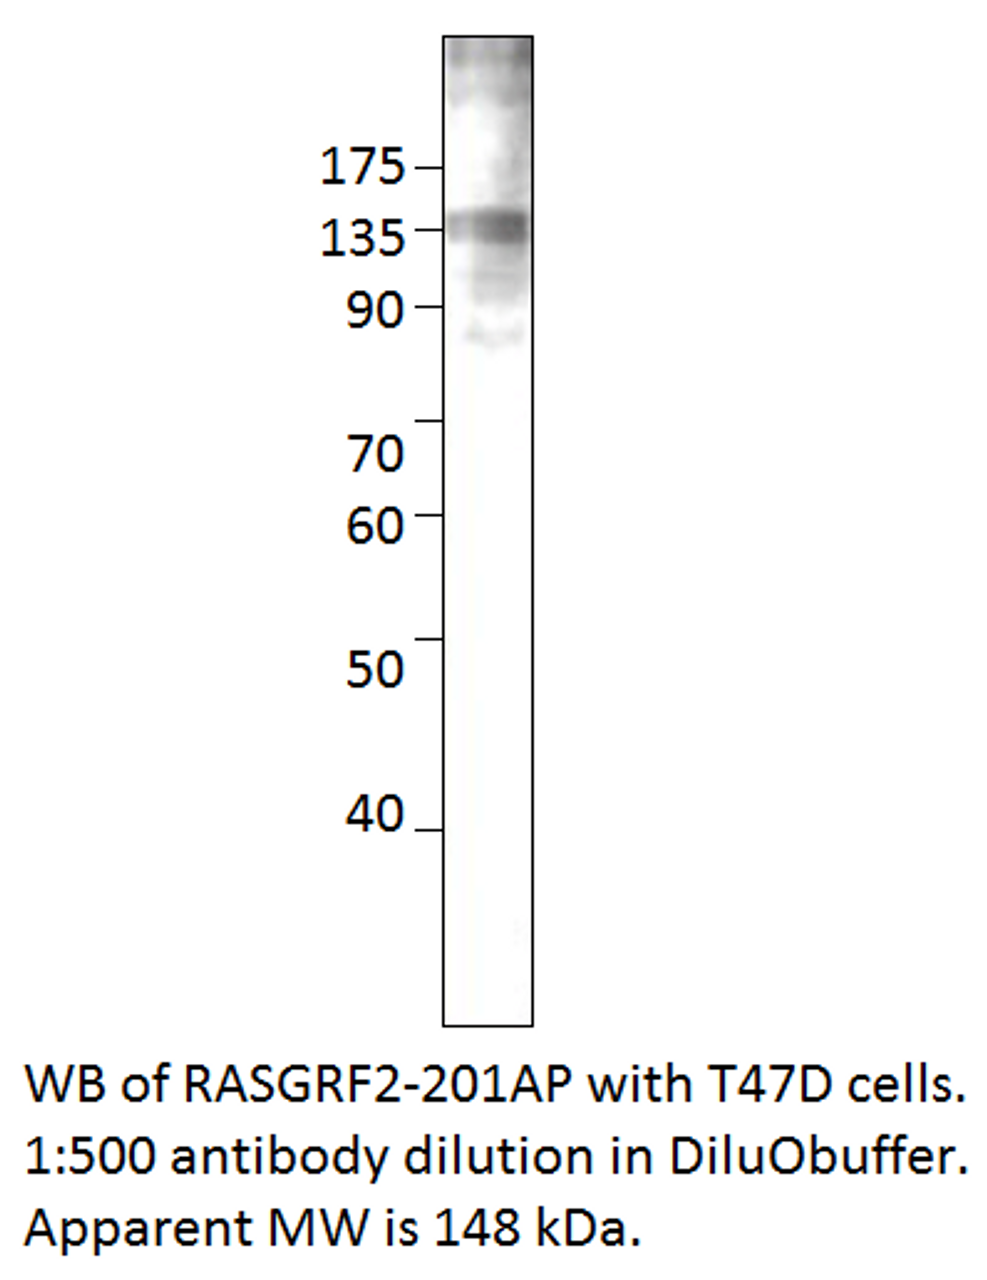 RASGRF2 Antibody from Fabgennix